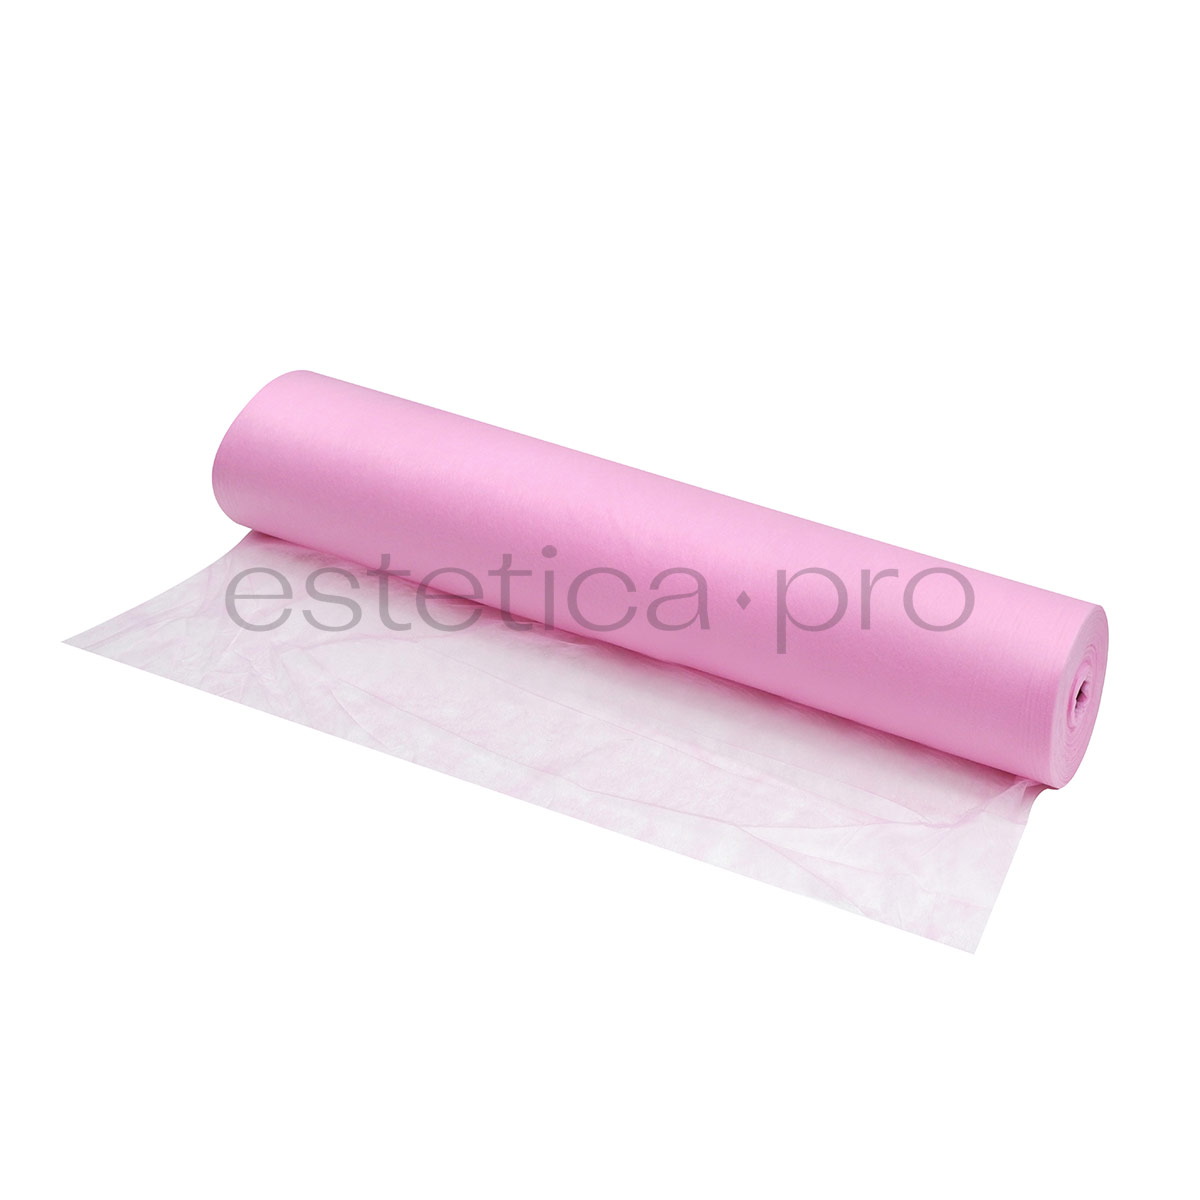 Простыни одноразовые 70*200,SMS 14 гр/м,100 шт (рулон), цвет розовый